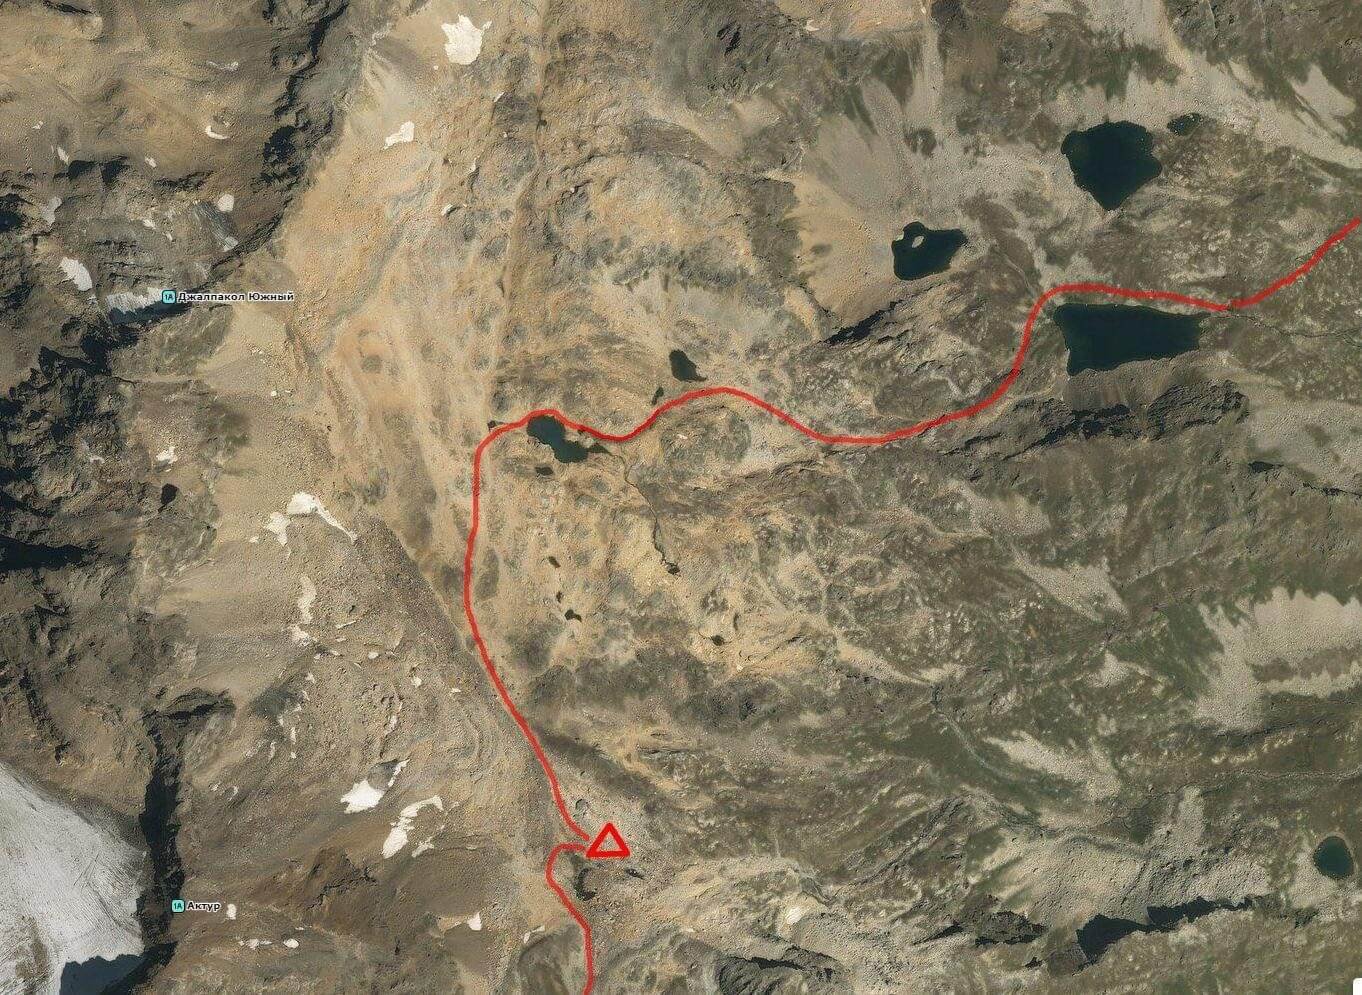 Отчет о горном маршруте 2 к.с. по Зап. Кавказу (Гвандра)